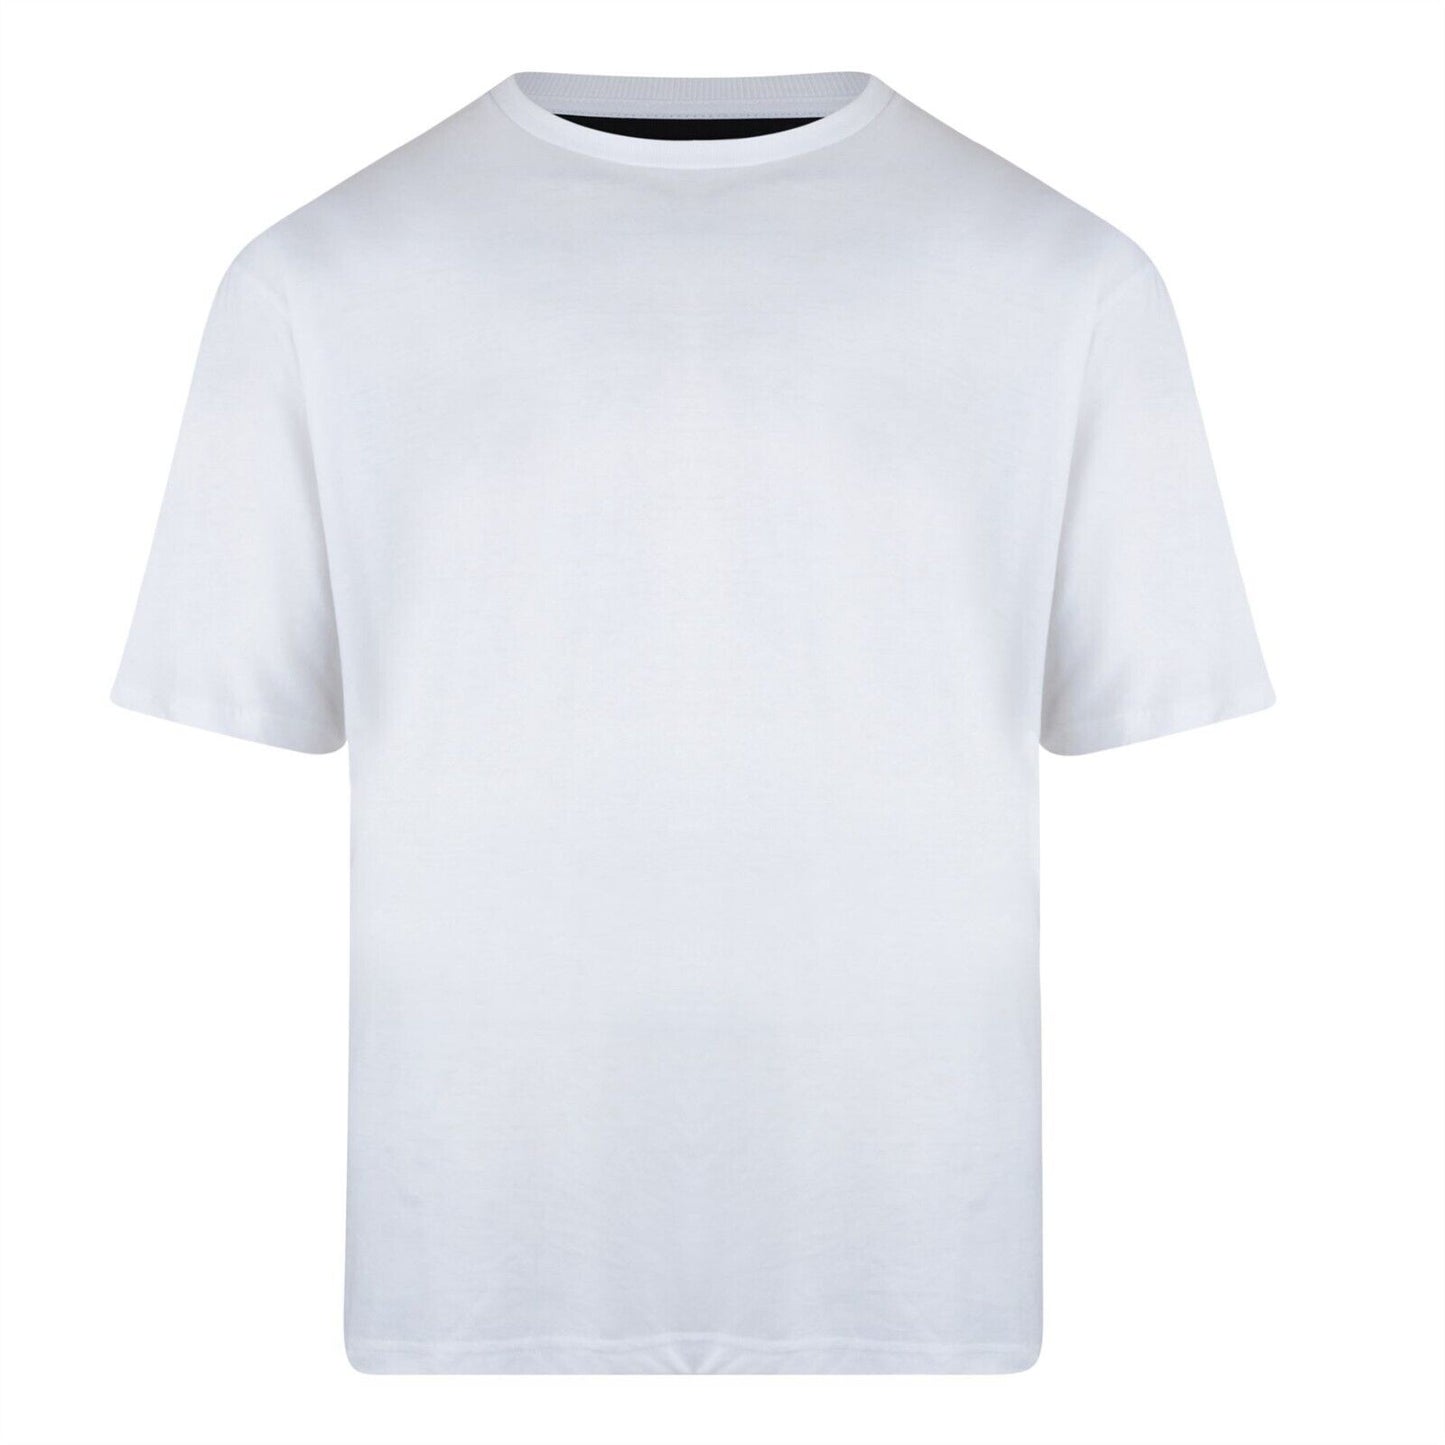 Kam Big & Tall Kam T-shirts Short Sleeve Crew Neck Smart Tee Casual Top 2XL-8XL